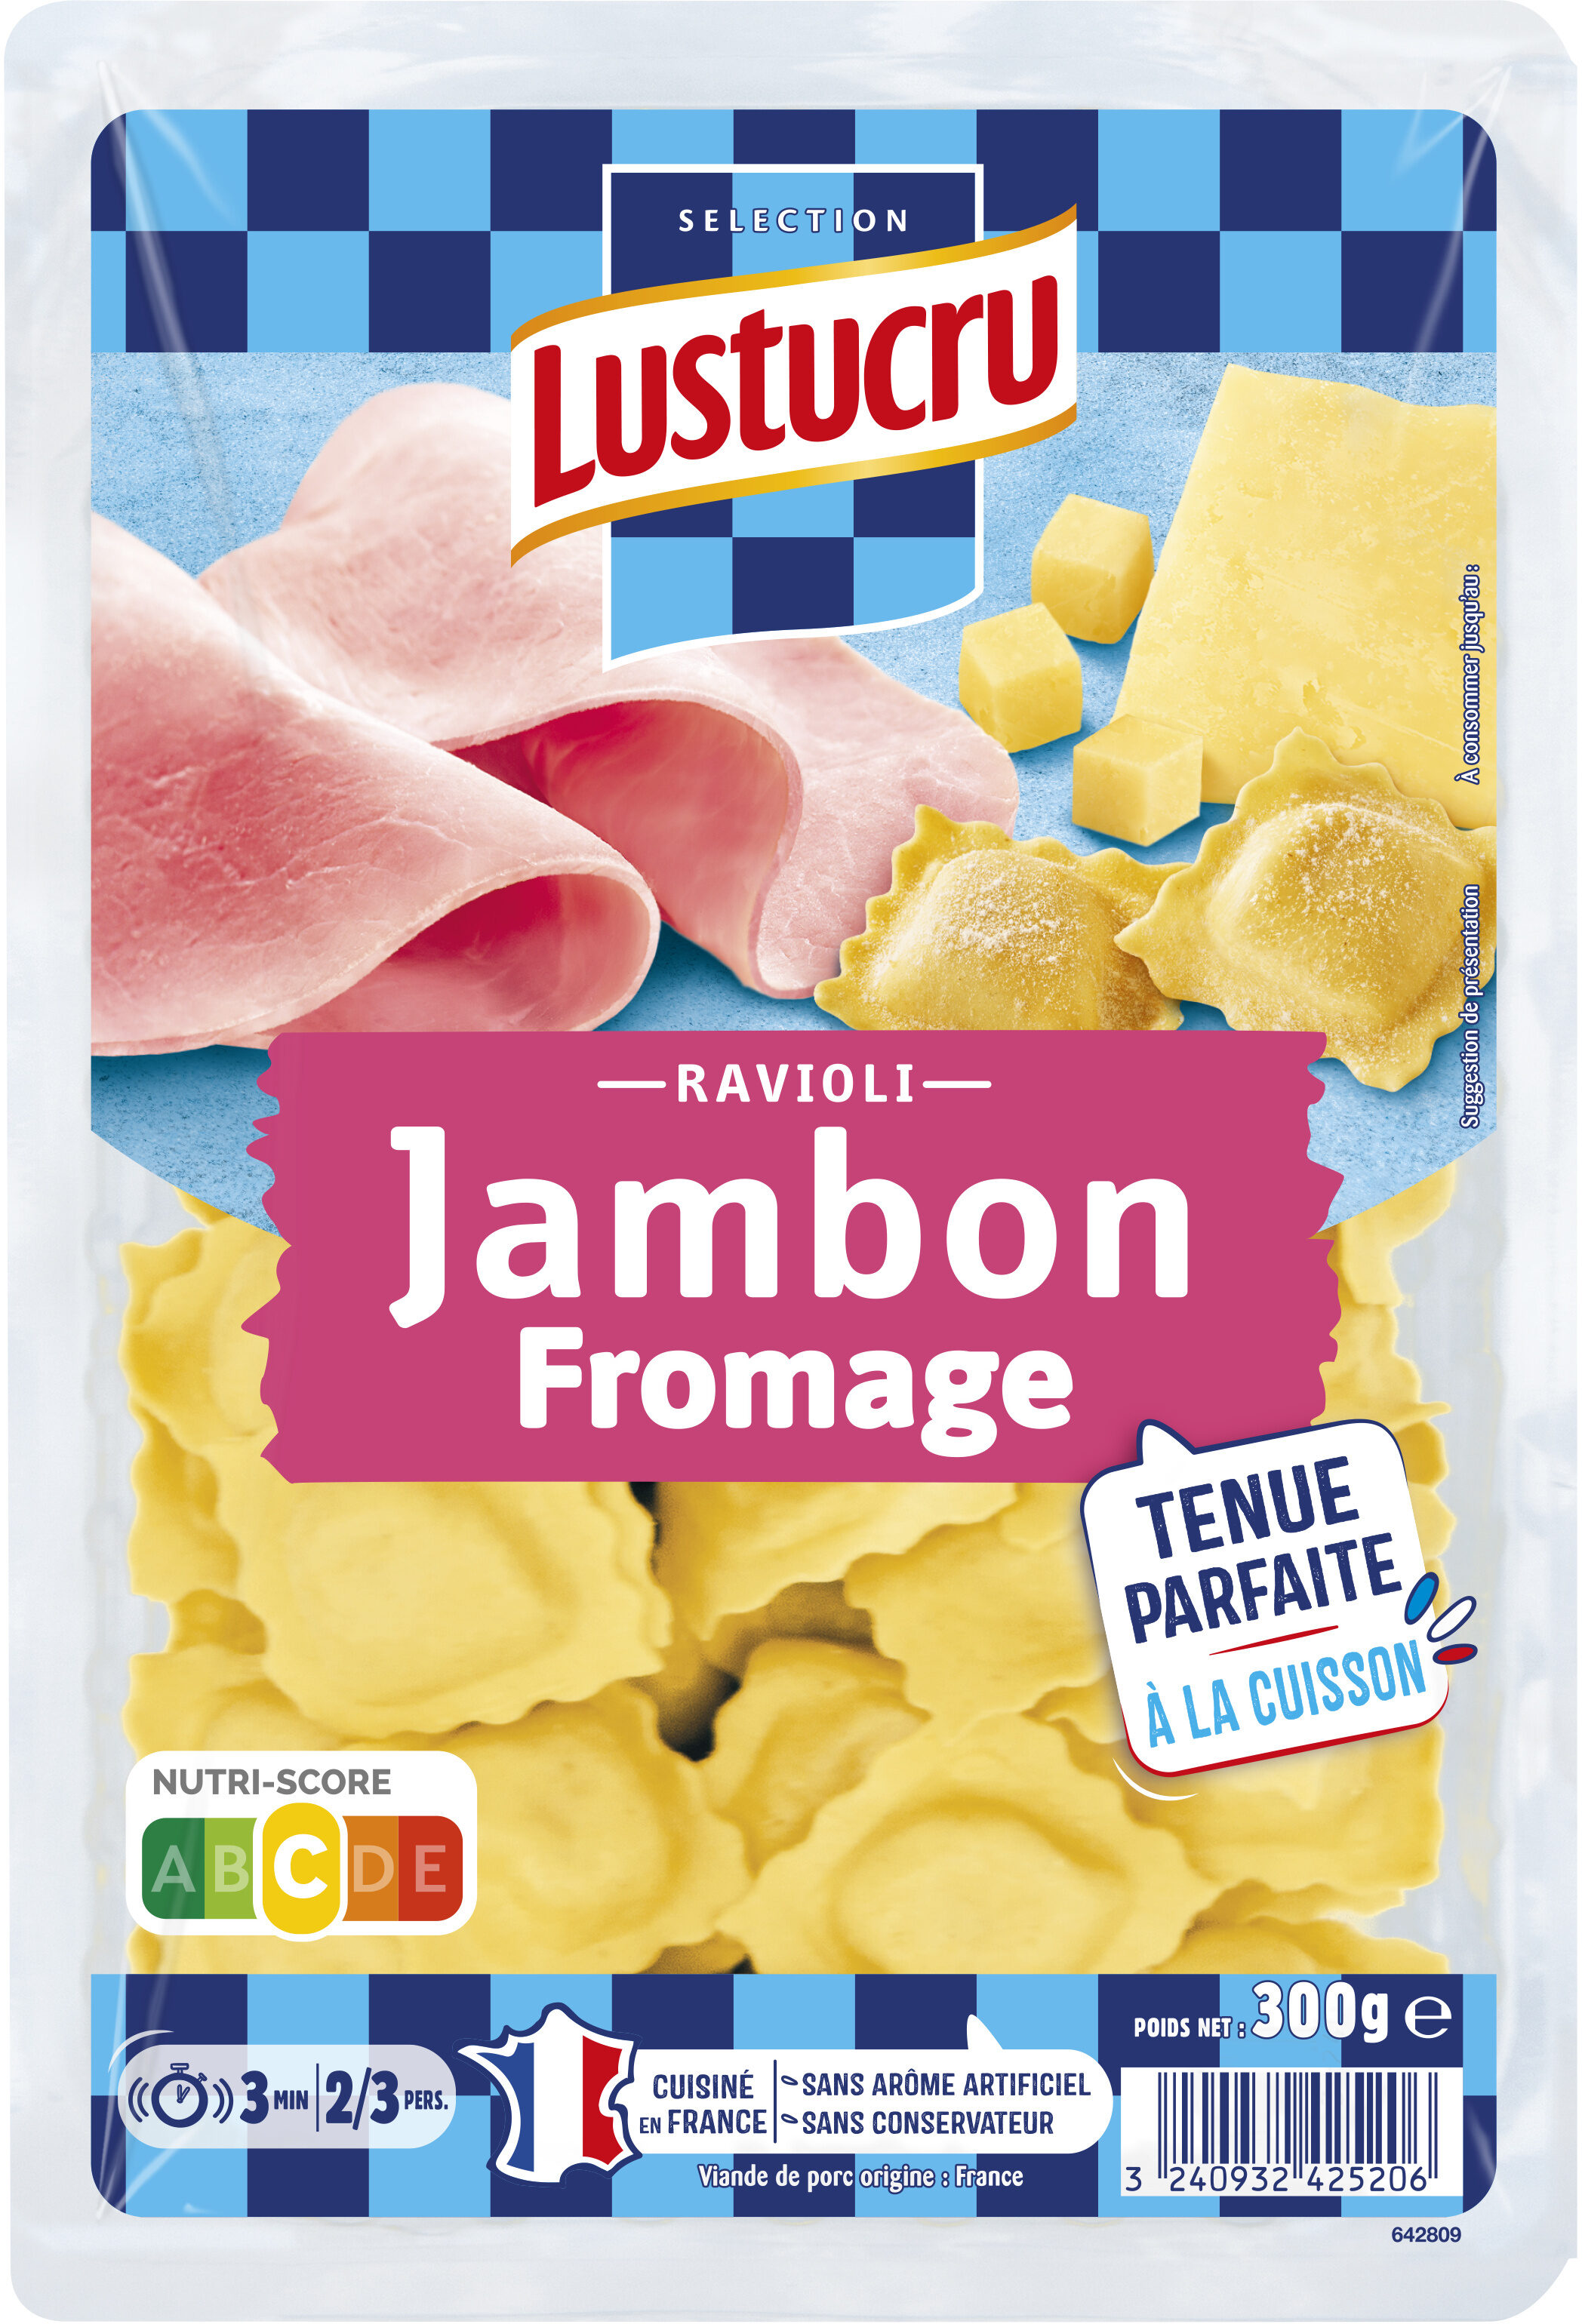 Lustucru ravioli jambon fromage 300g - Producto - fr